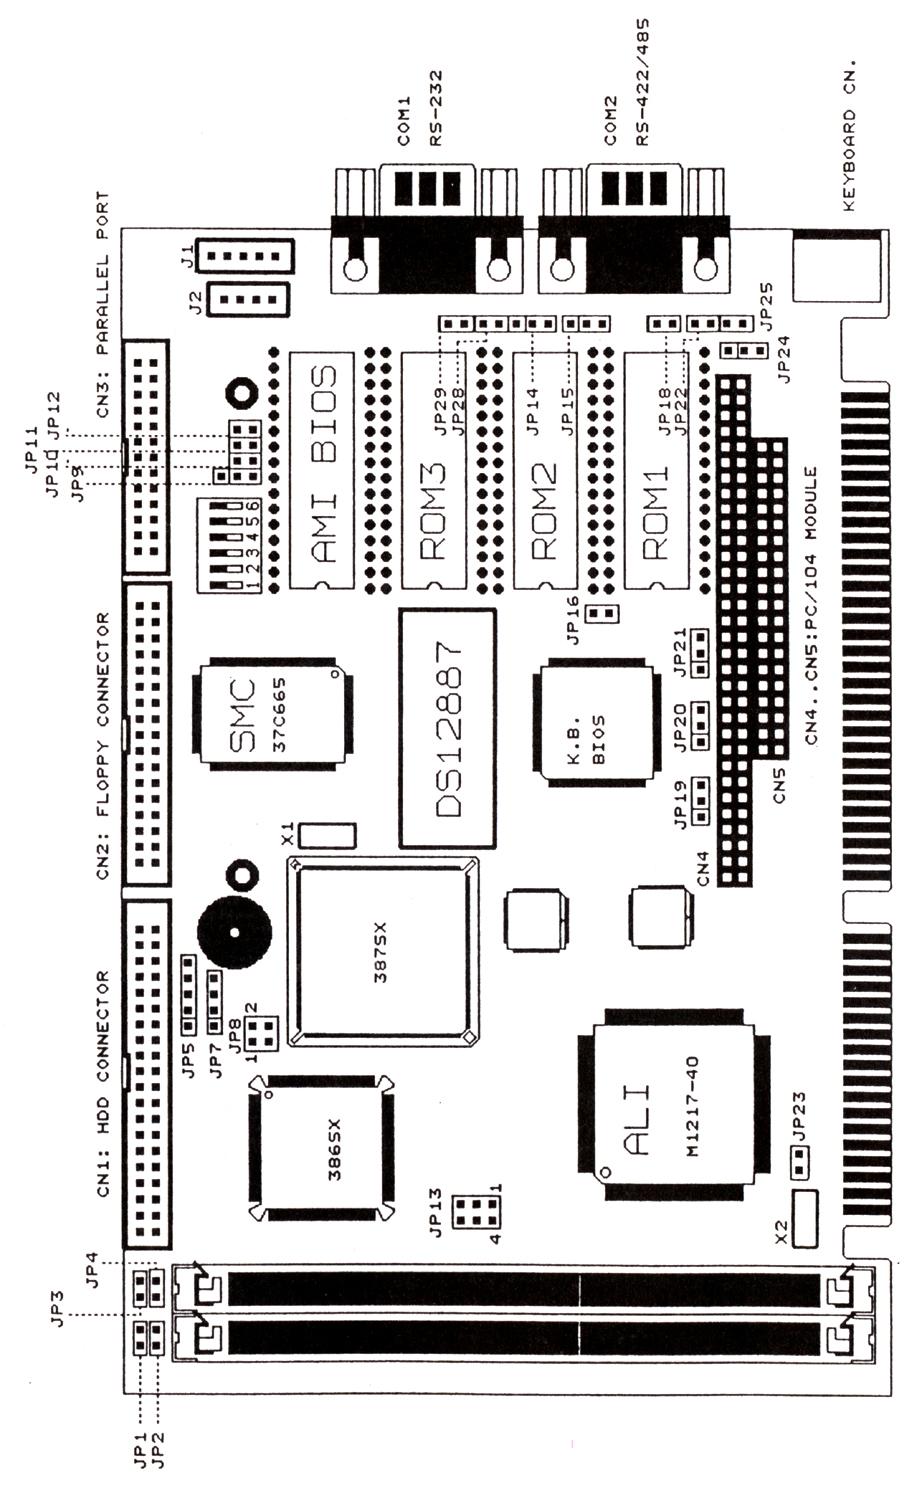 PCA-6134P PCB layout